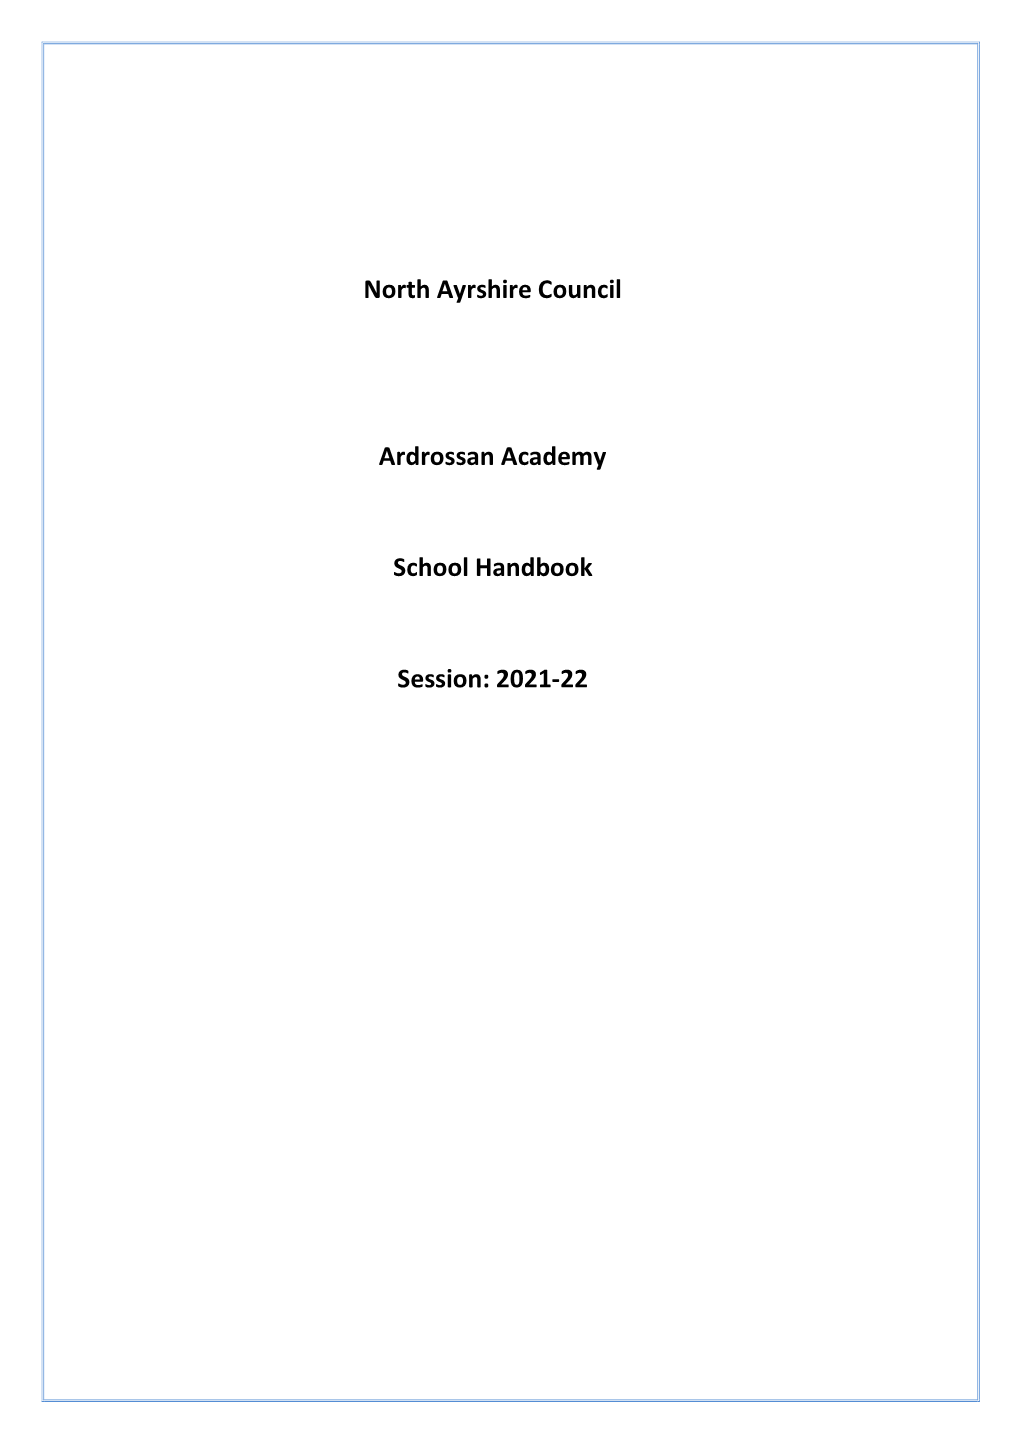 North Ayrshire Council Ardrossan Academy School Handbook Session